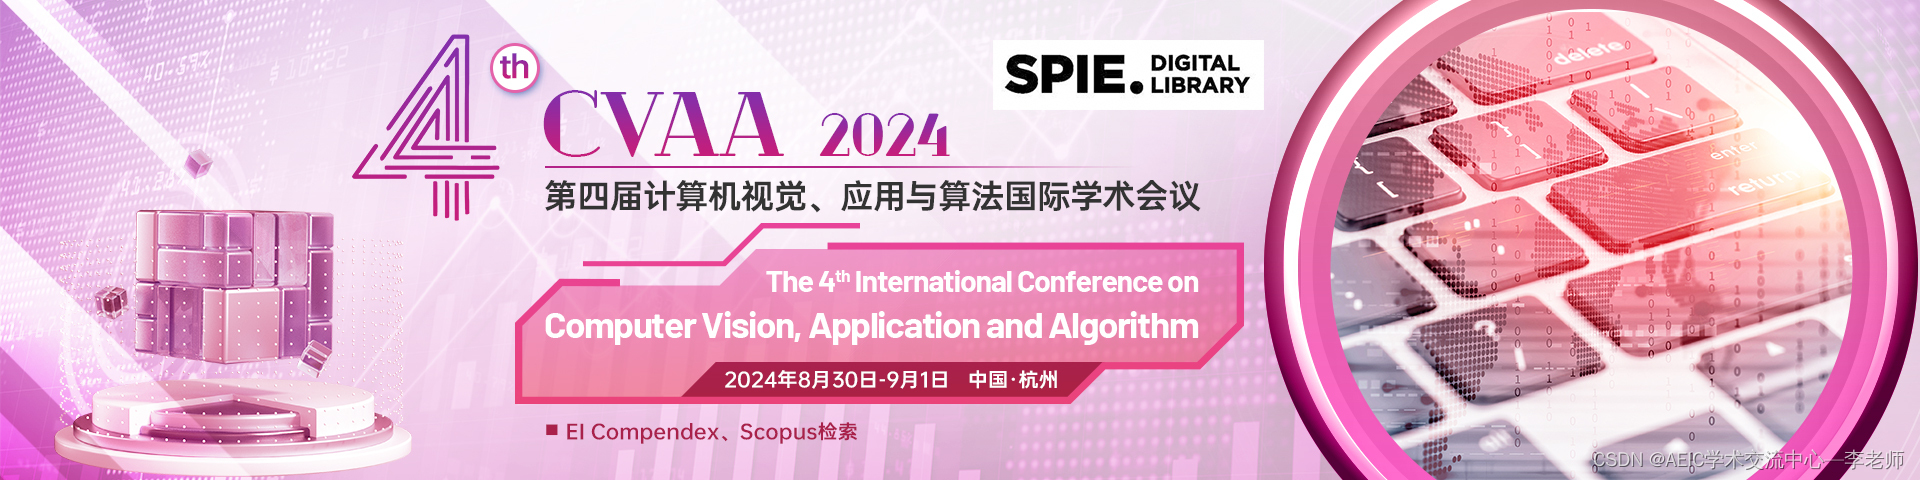 【SPIE独立出版、有ISBN号和ISSN号、往届均已实现EI检索】第四届计算机视觉、应用与算法国际学术会议（CVAA 2024)